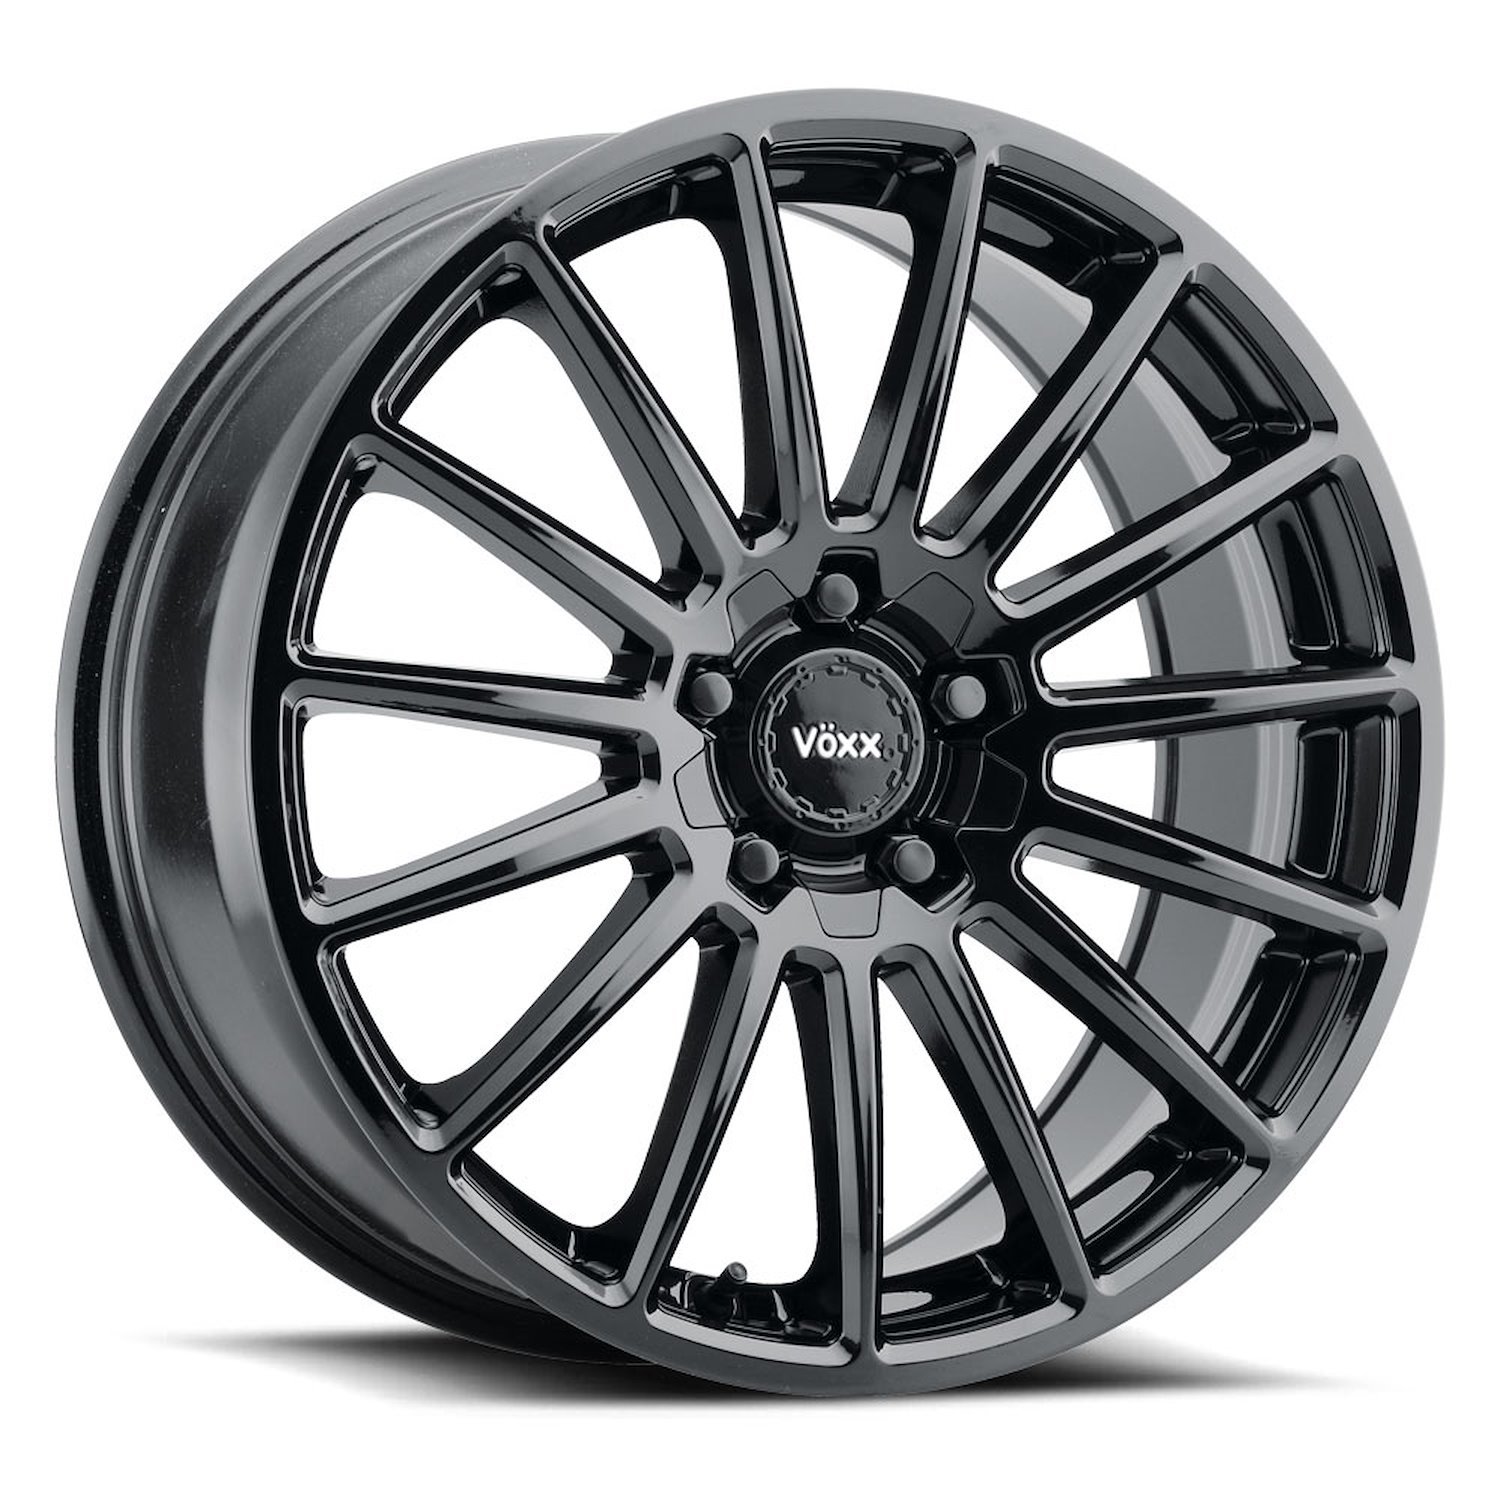 CAS 670-5003-40 GB Casina Wheel [Size: 16" x 7"] Finish: Gloss Black